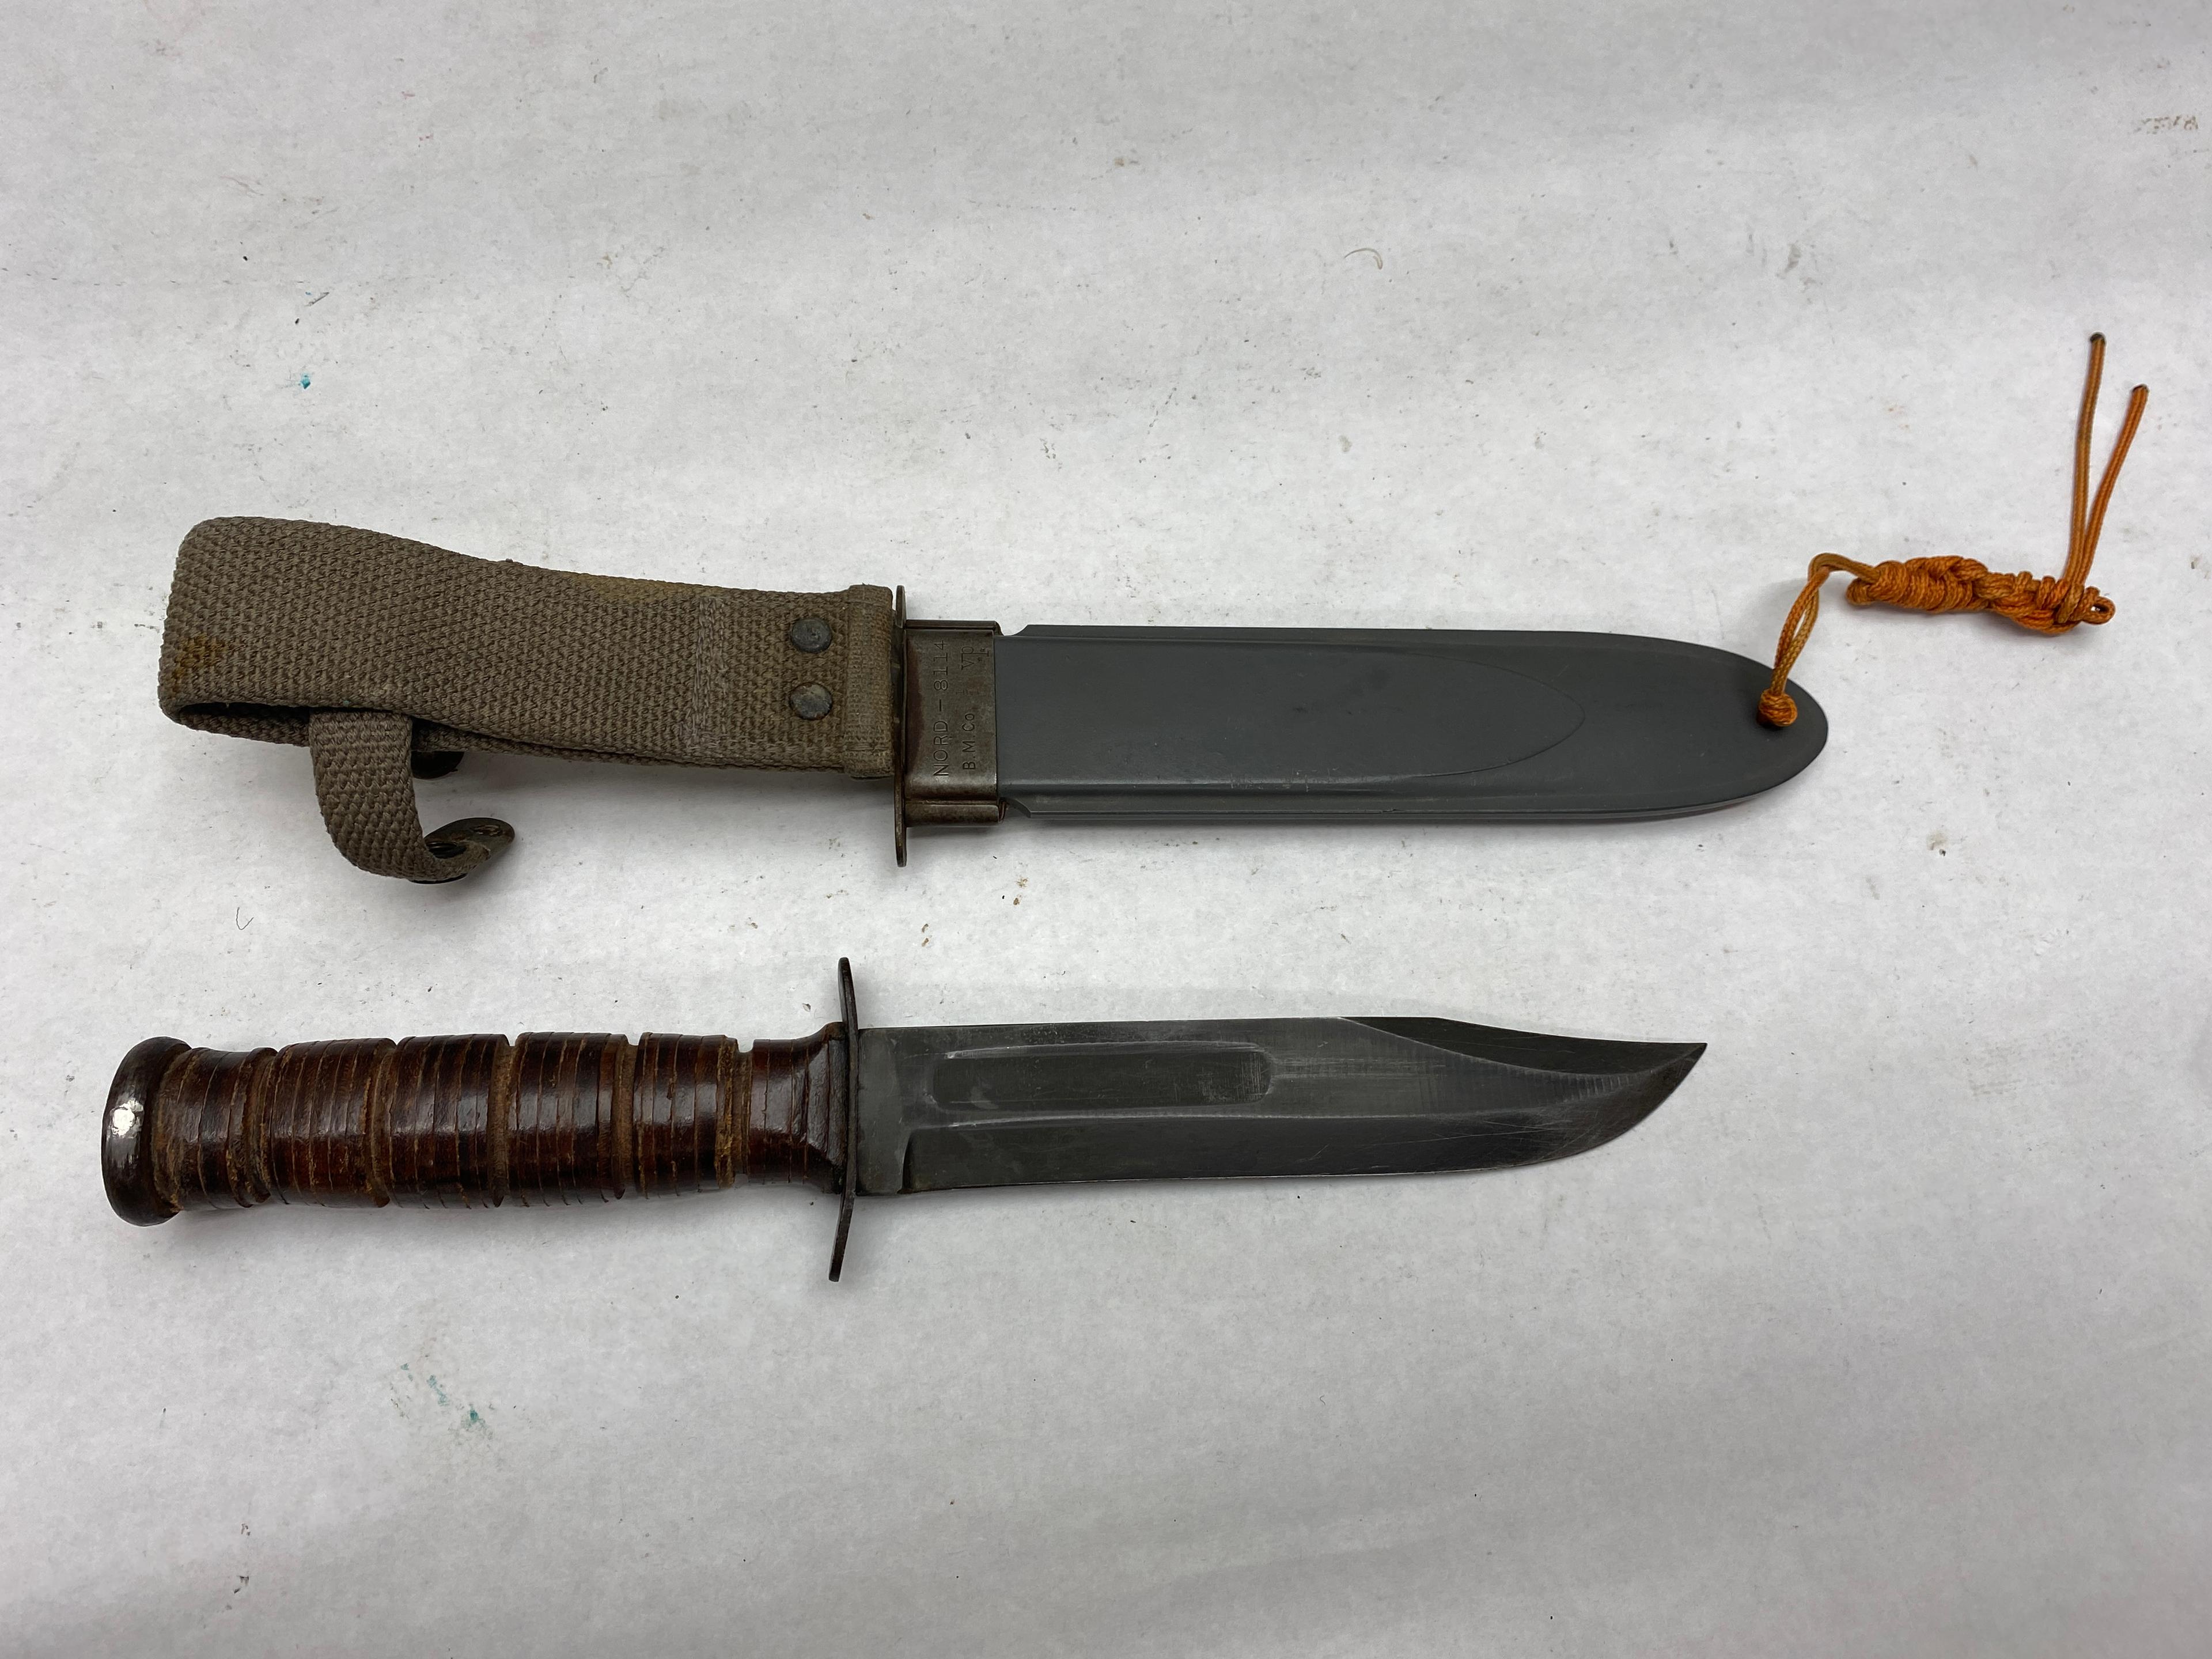 U.S.N. MK2 COMBAT KNIFE